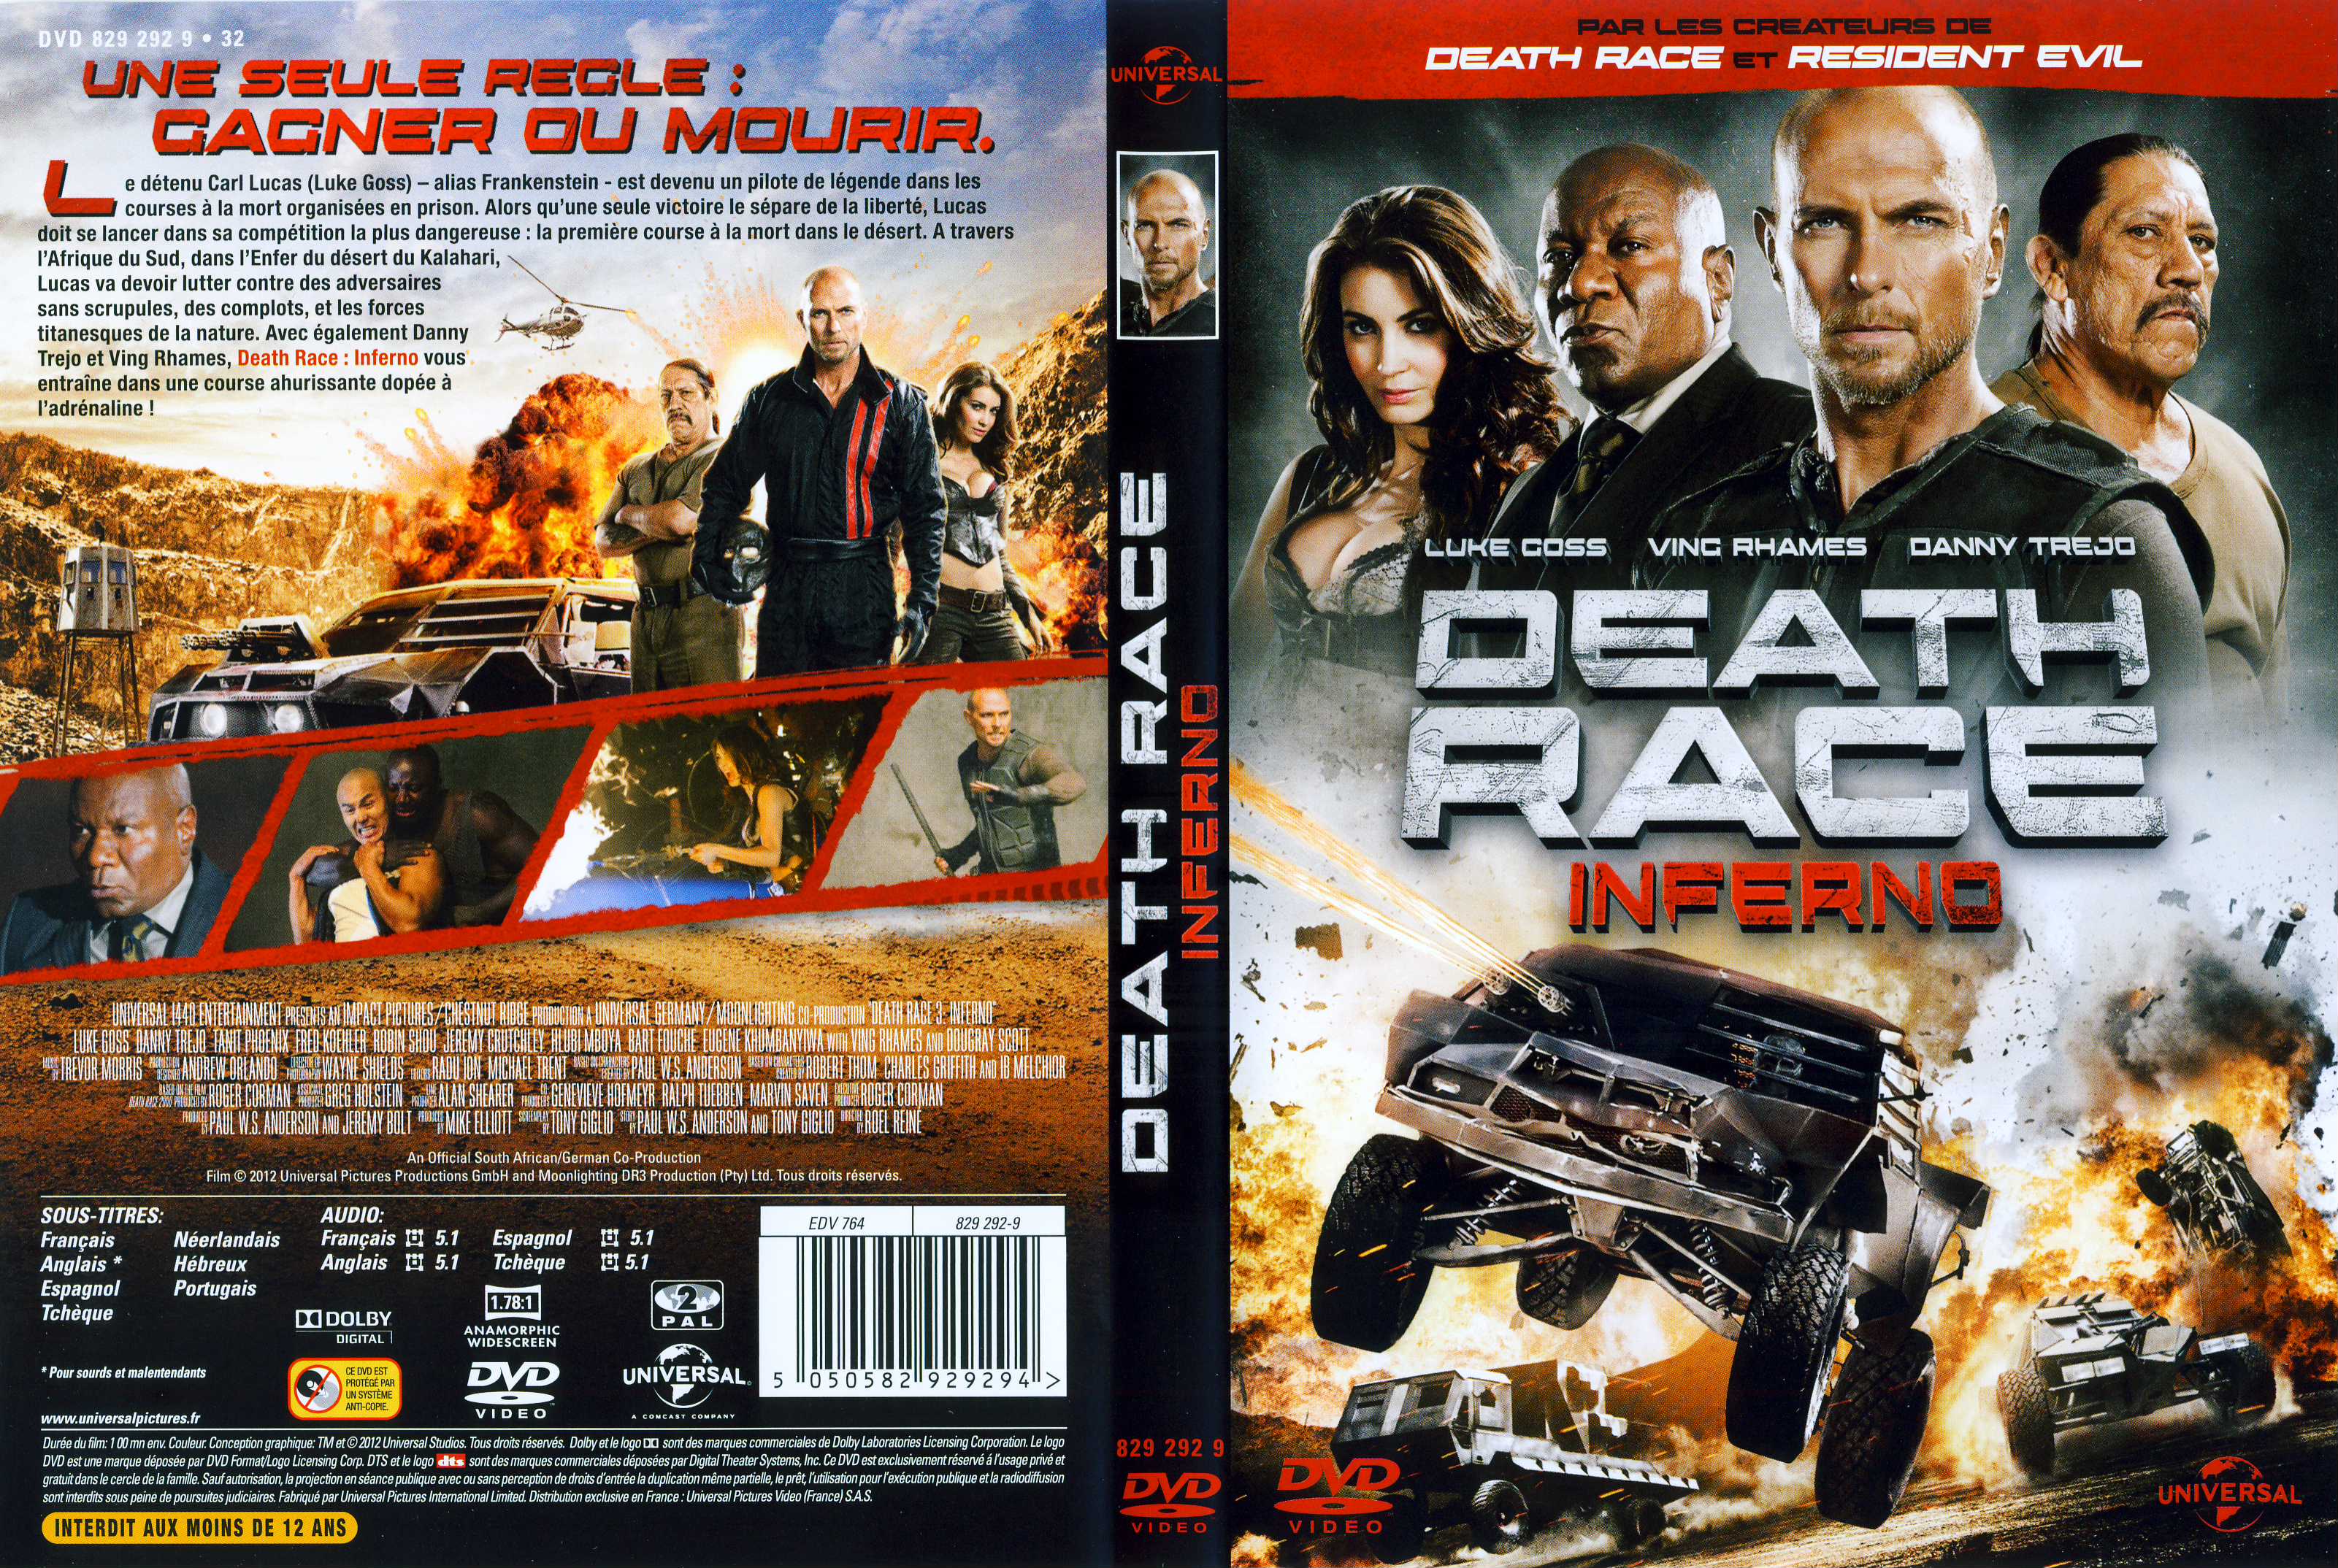 Jaquette DVD Death Race 3 Inferno